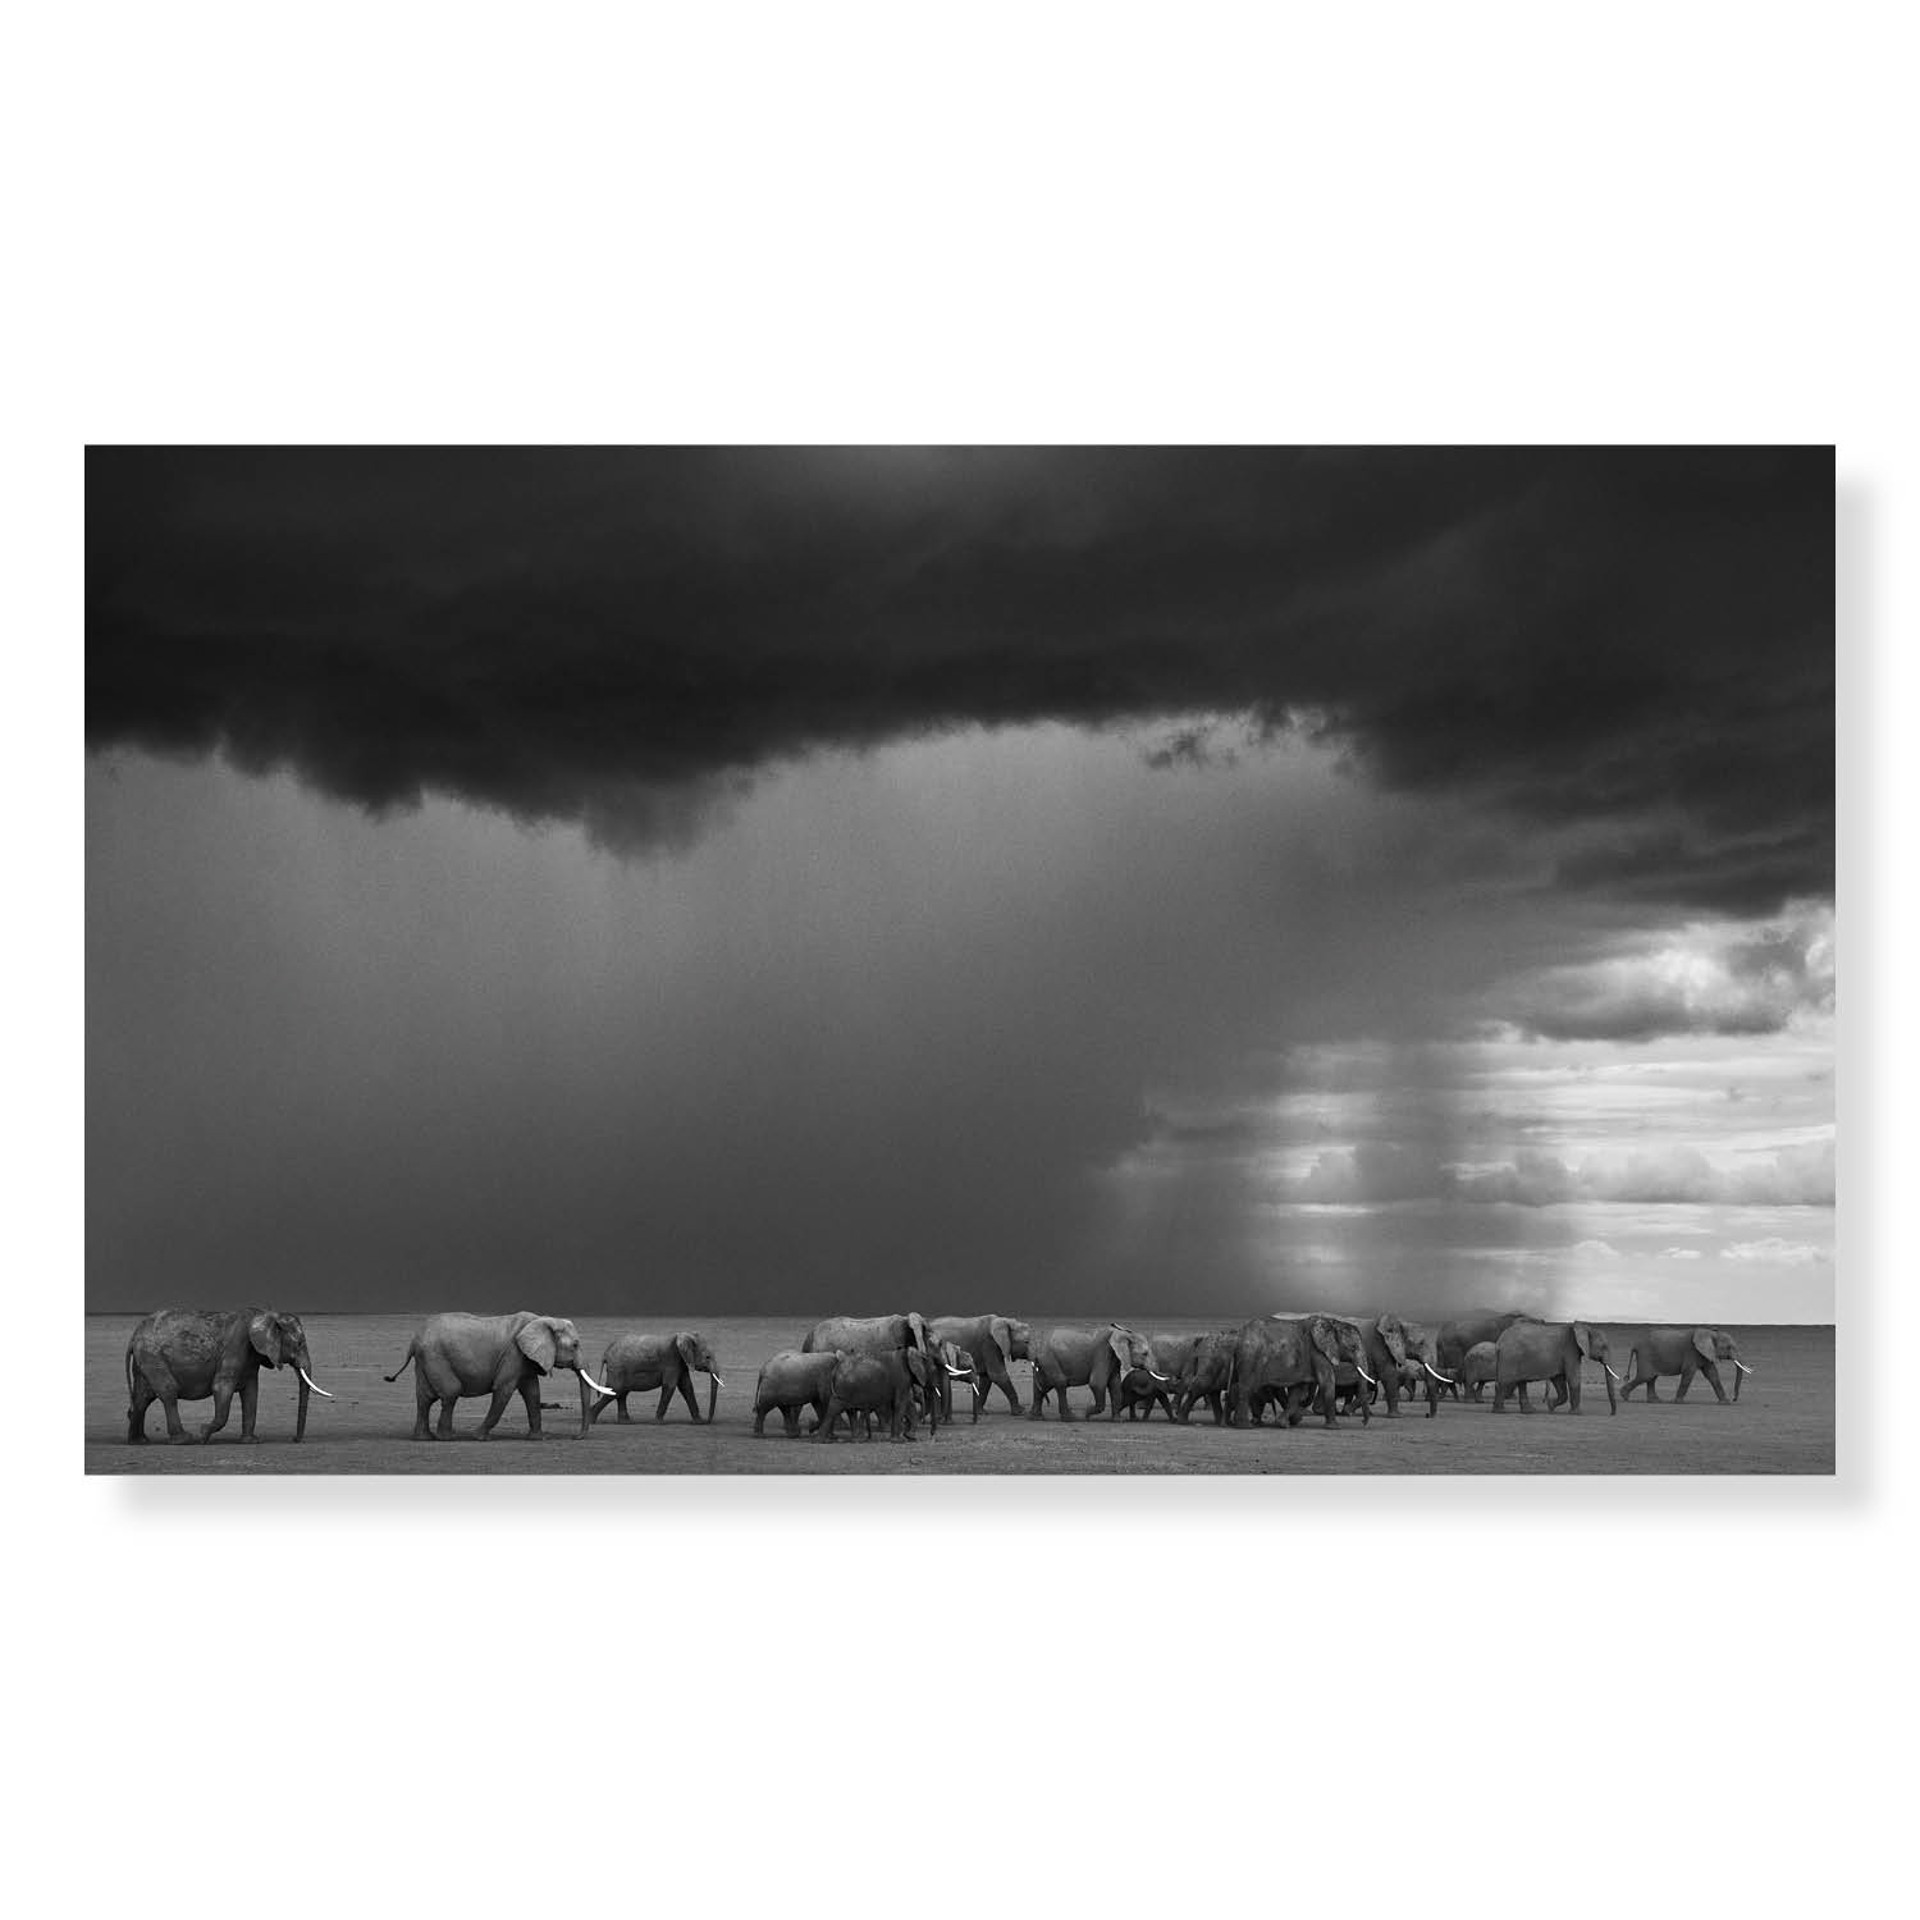 The Gathering Storm by David Yarrow